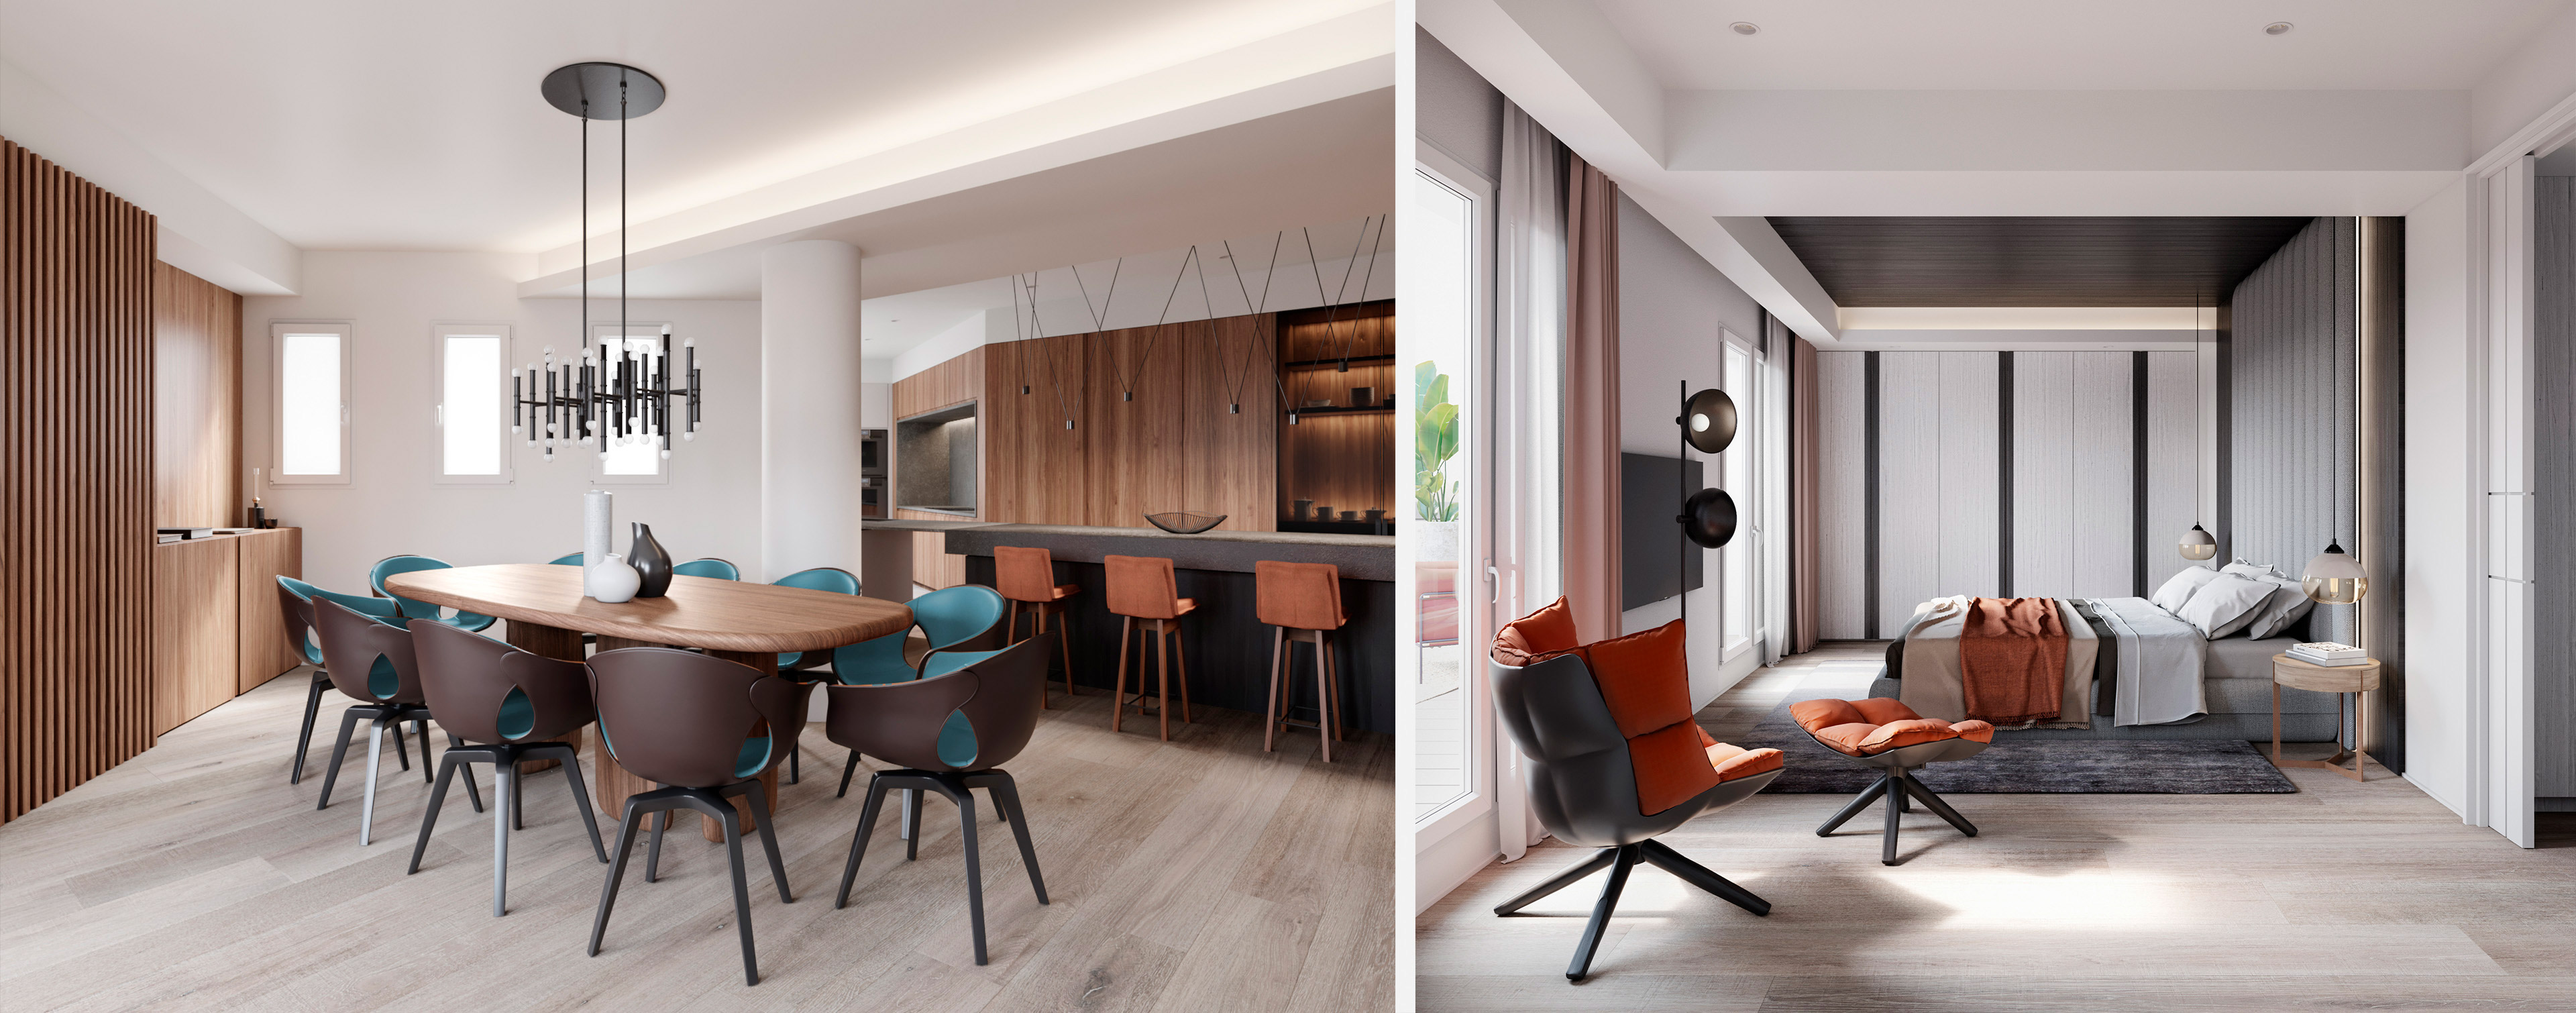 luv studio luxury architects barcelona mallorca penthouse apartment IMG 01 - Mallorca Penthouse